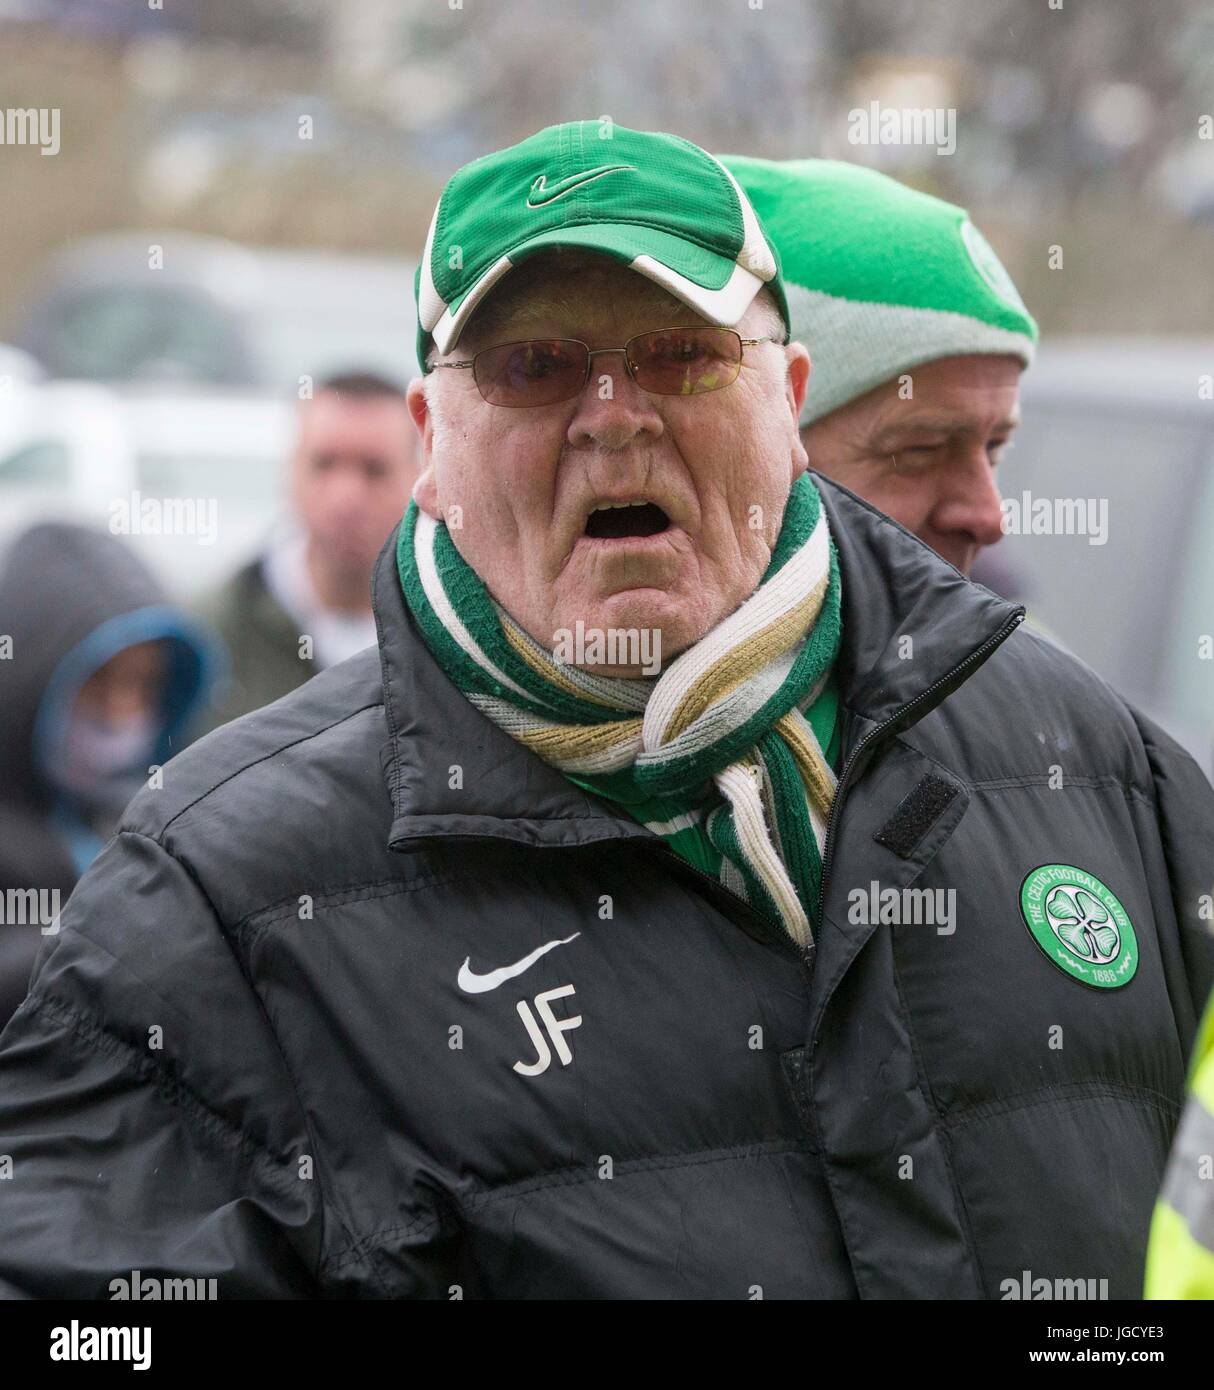 former-celtic-player-john-fallon-during-the-ladbrokes-scottish-premiership-JGCYE3.jpg